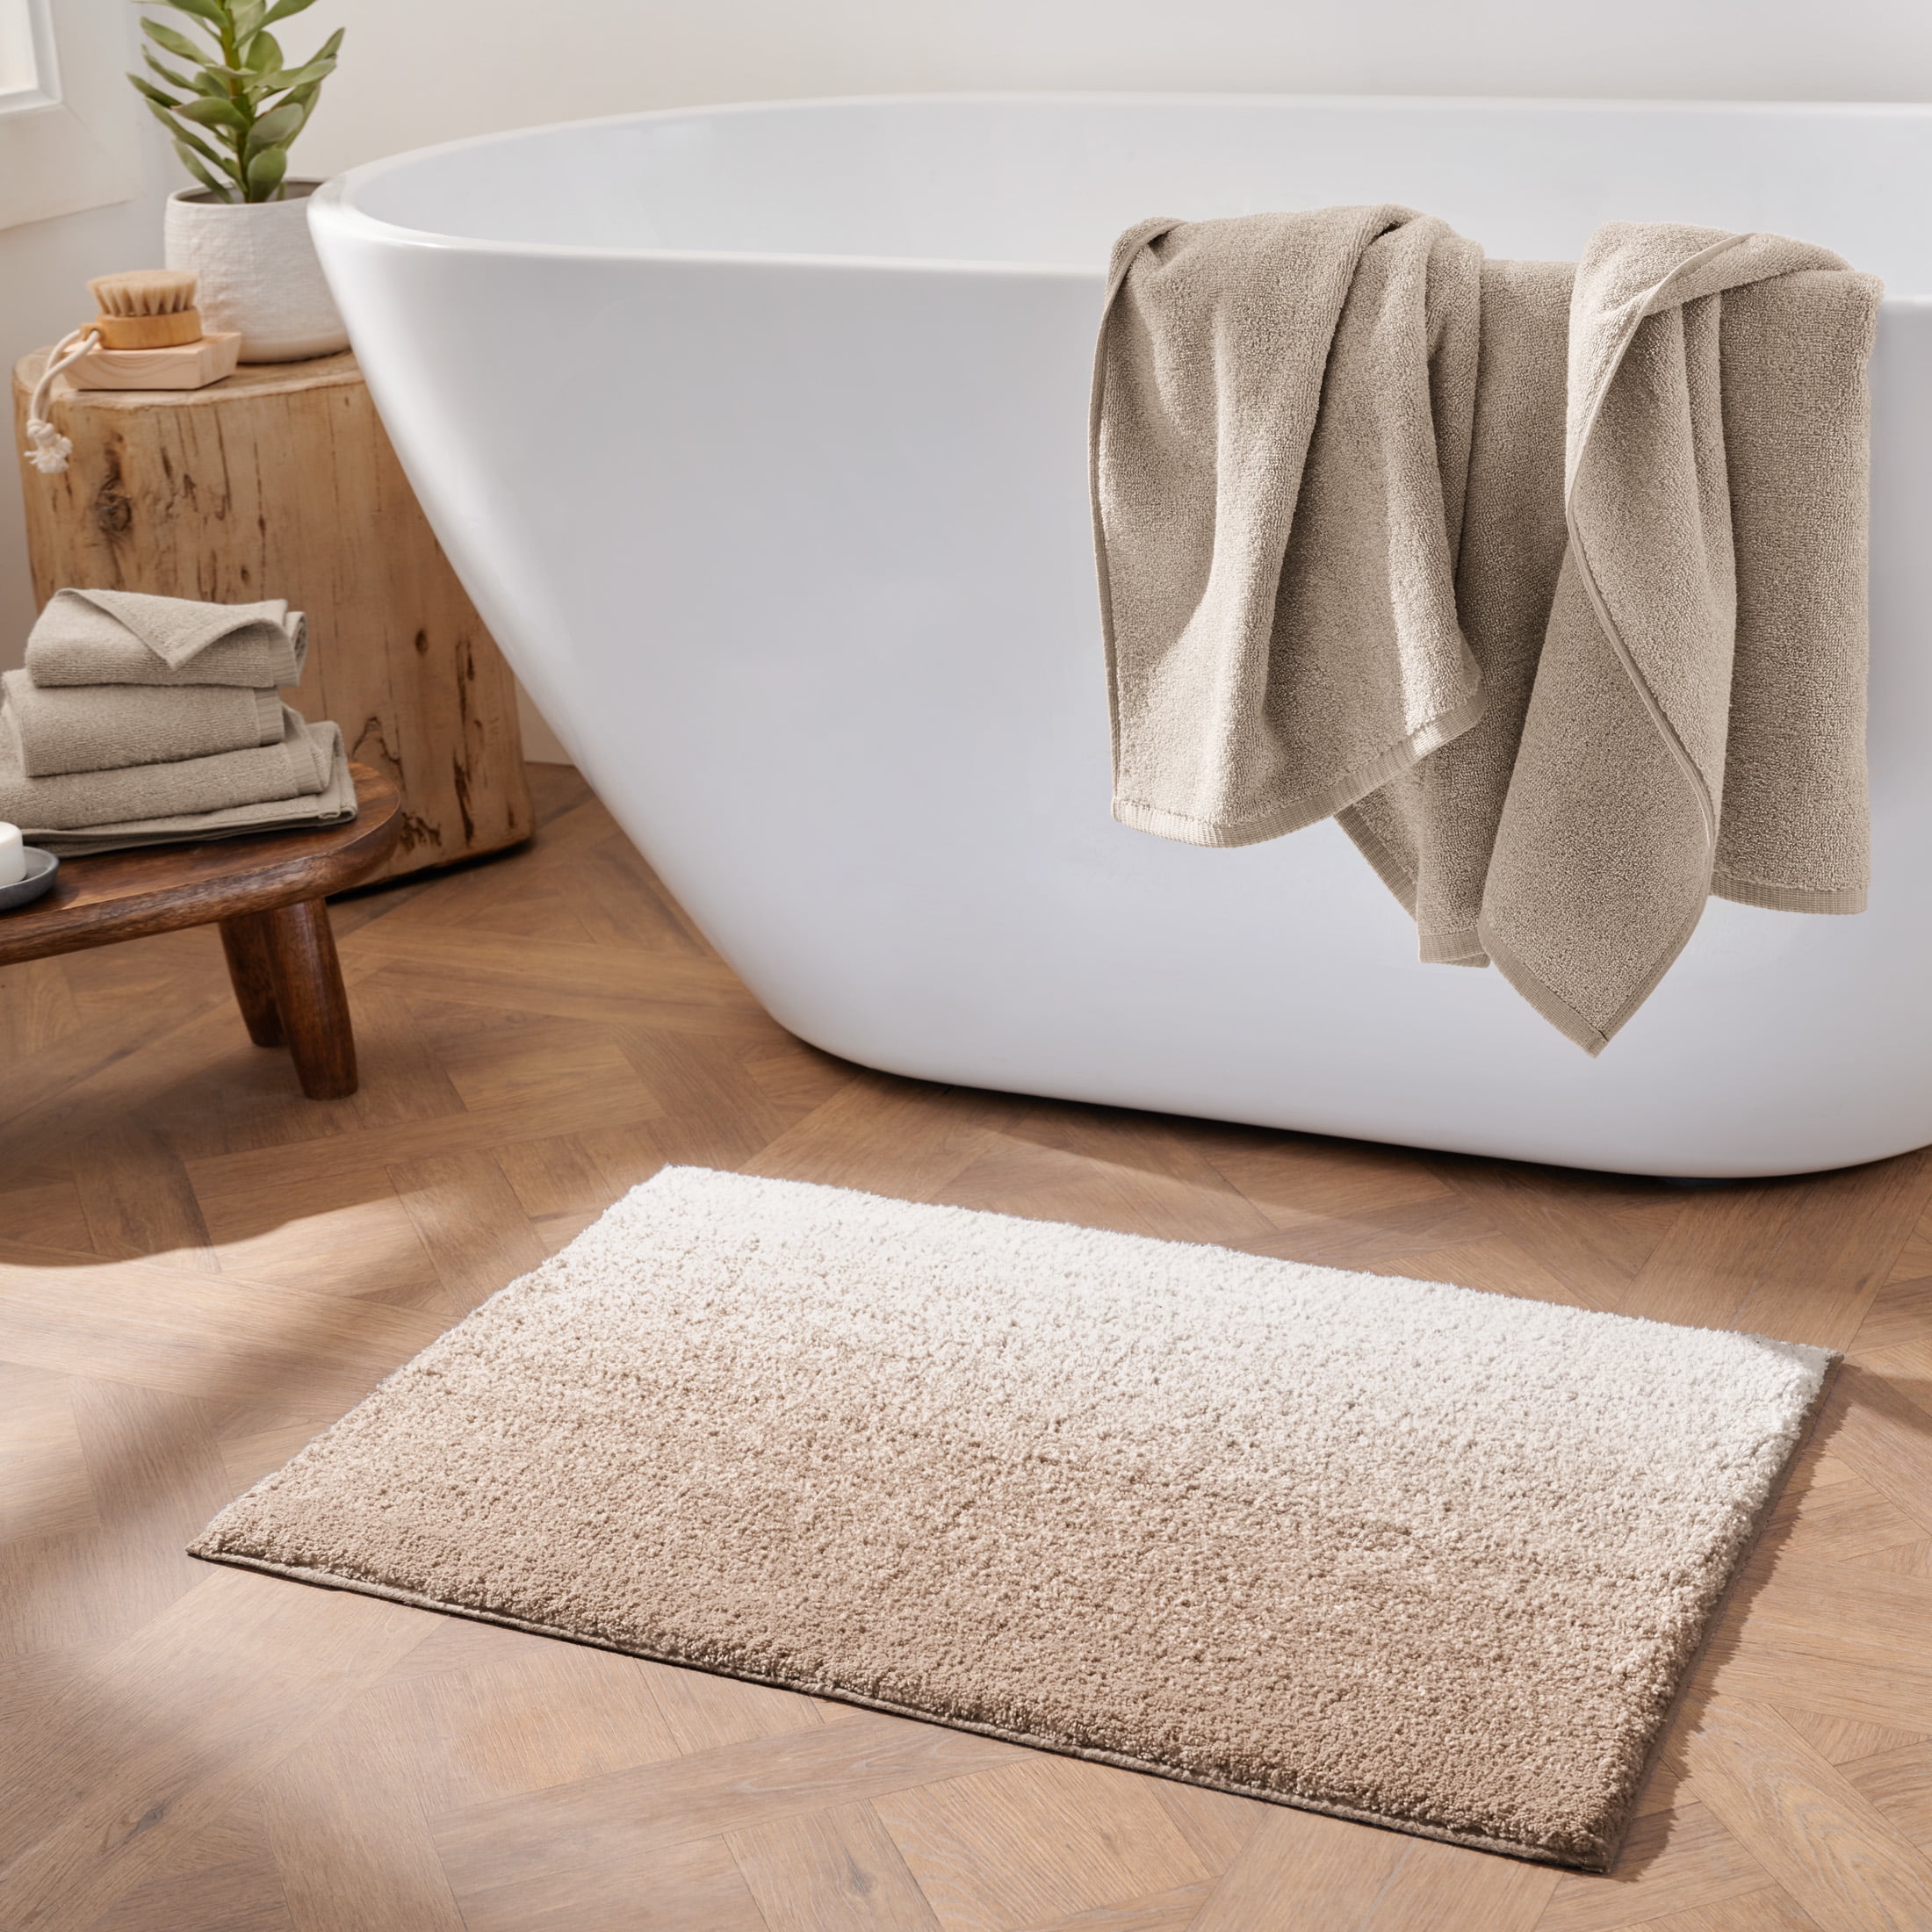 Highland Dunes Murri Ombre Bath Rug Set, Non Slip Bath Mat for Bathroom  Water Absorbent Soft Microfiber Shaggy & Reviews